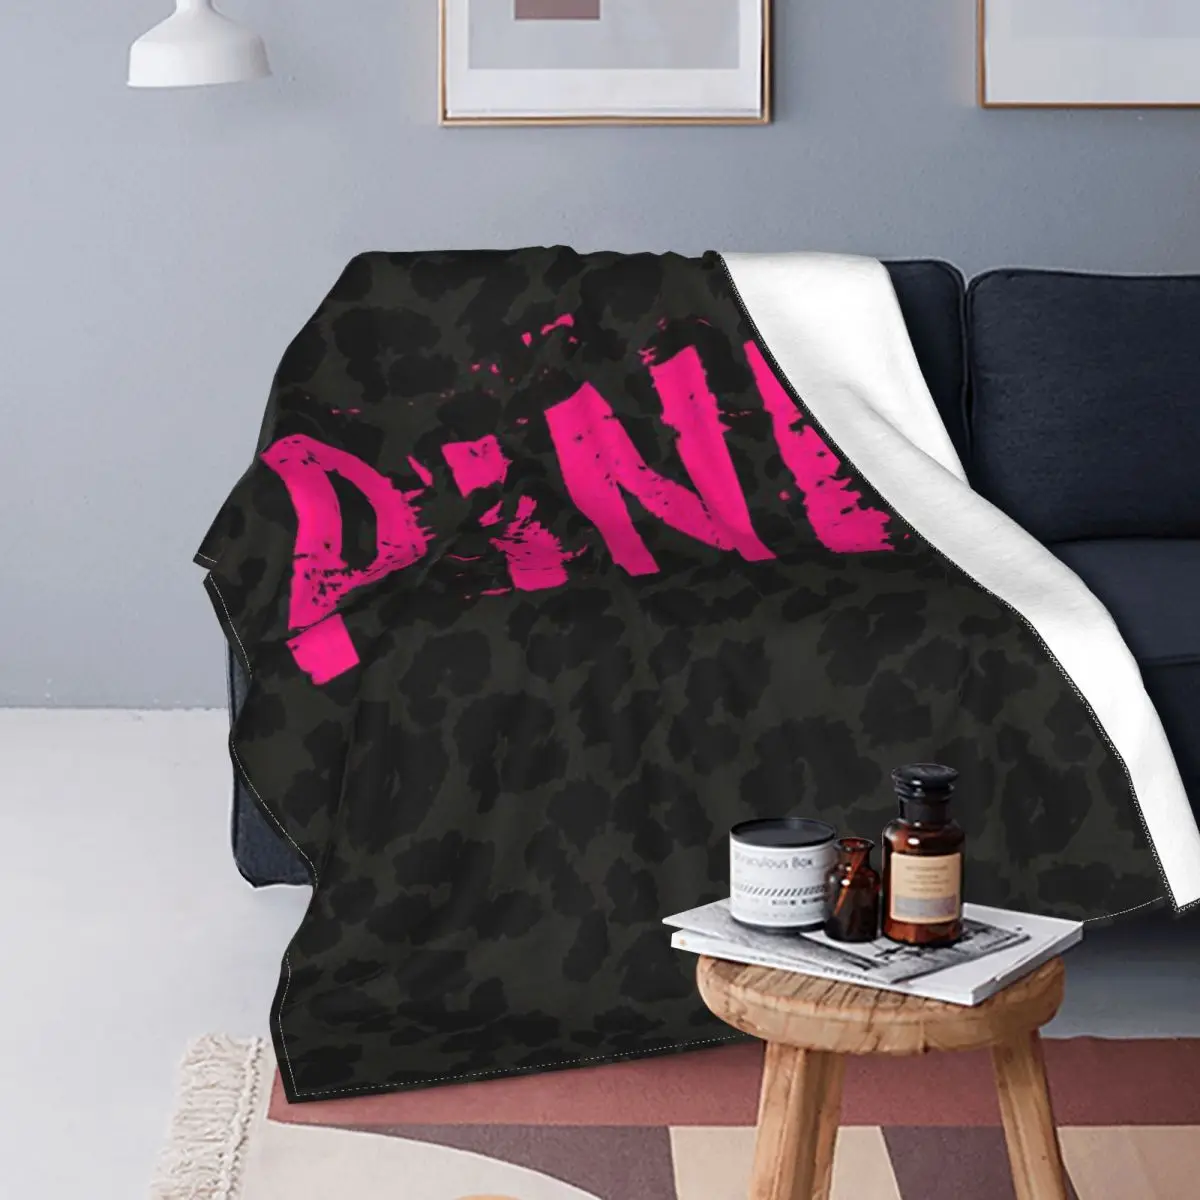  Girl Black Pink Girly Things Luxury Lipstick Throw Blanket  Flannel Fleece Velvet Blanket Lightweight Cozy Plush Microfiber Bed Blanket  Luxury Lap Blanket 50x40 : לבית ולמטבח